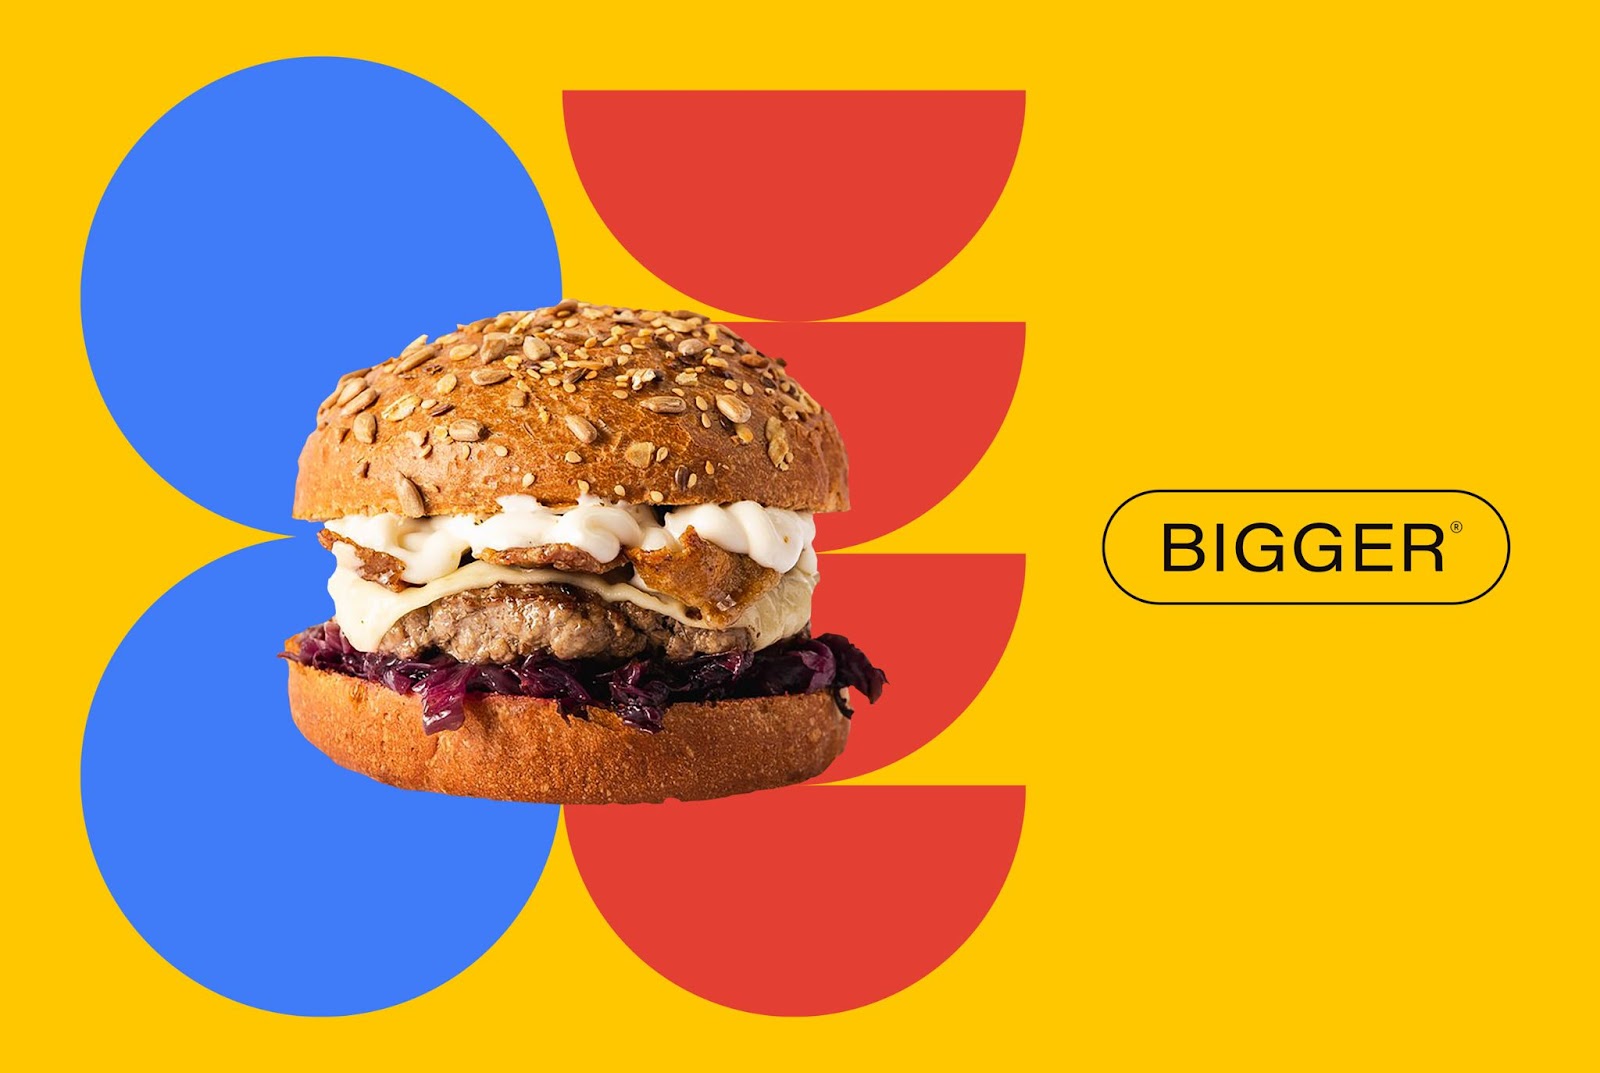 Branding and logo design artifacts for Bigger burger